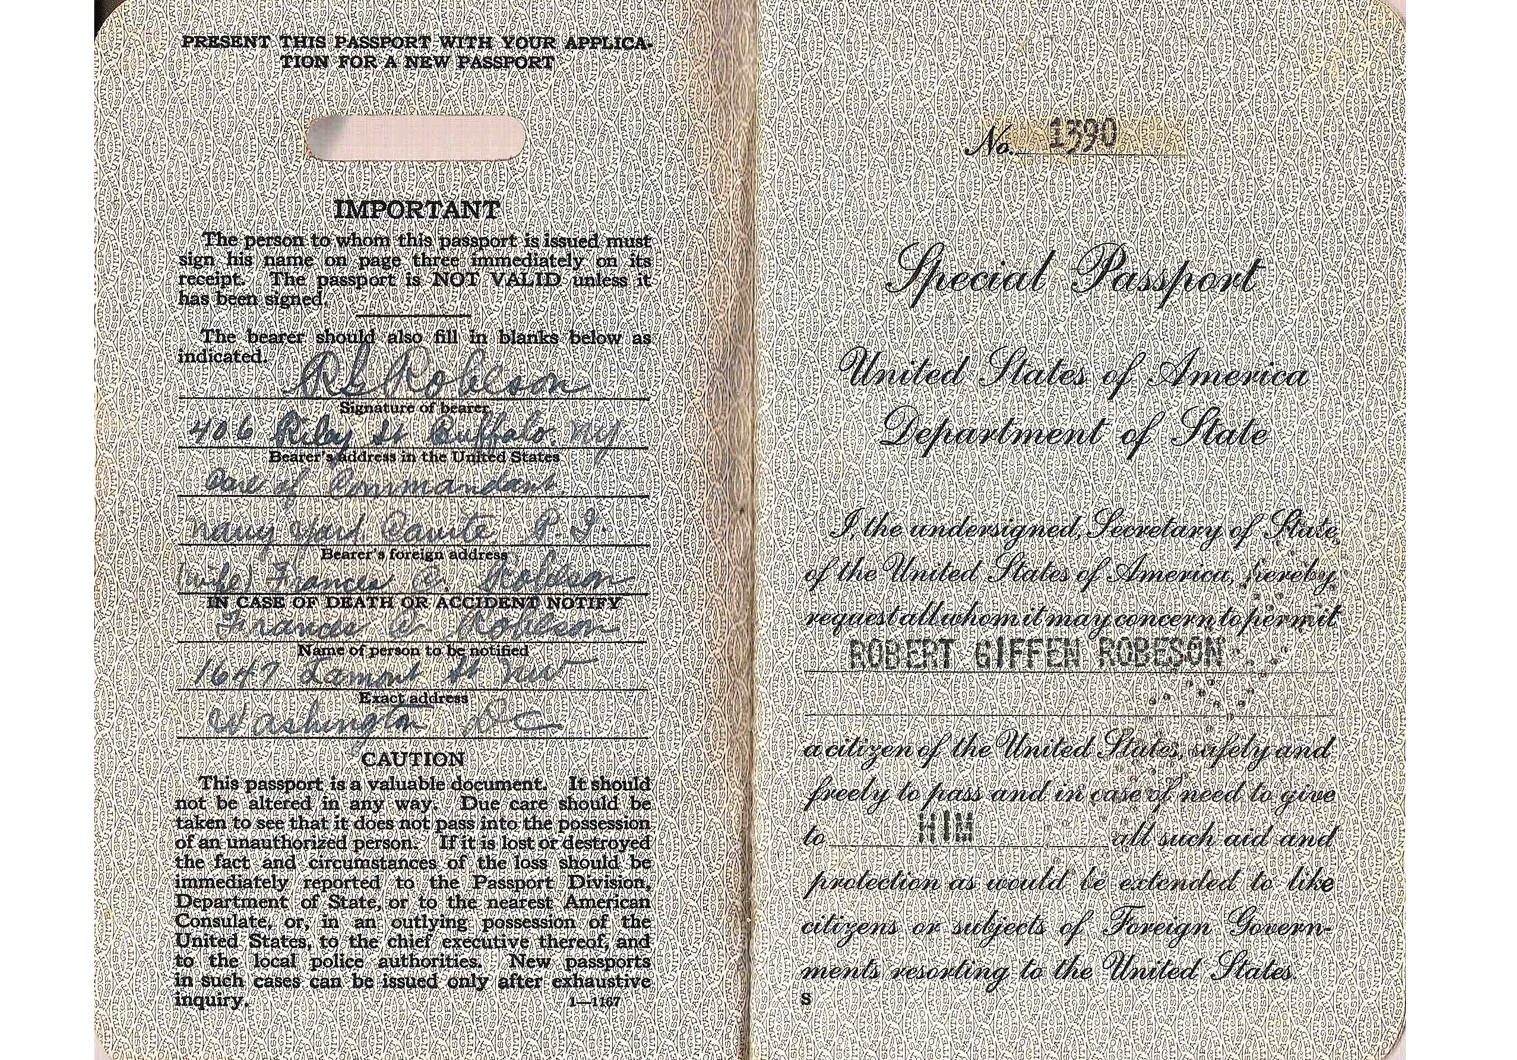 WW2 US Special passport.